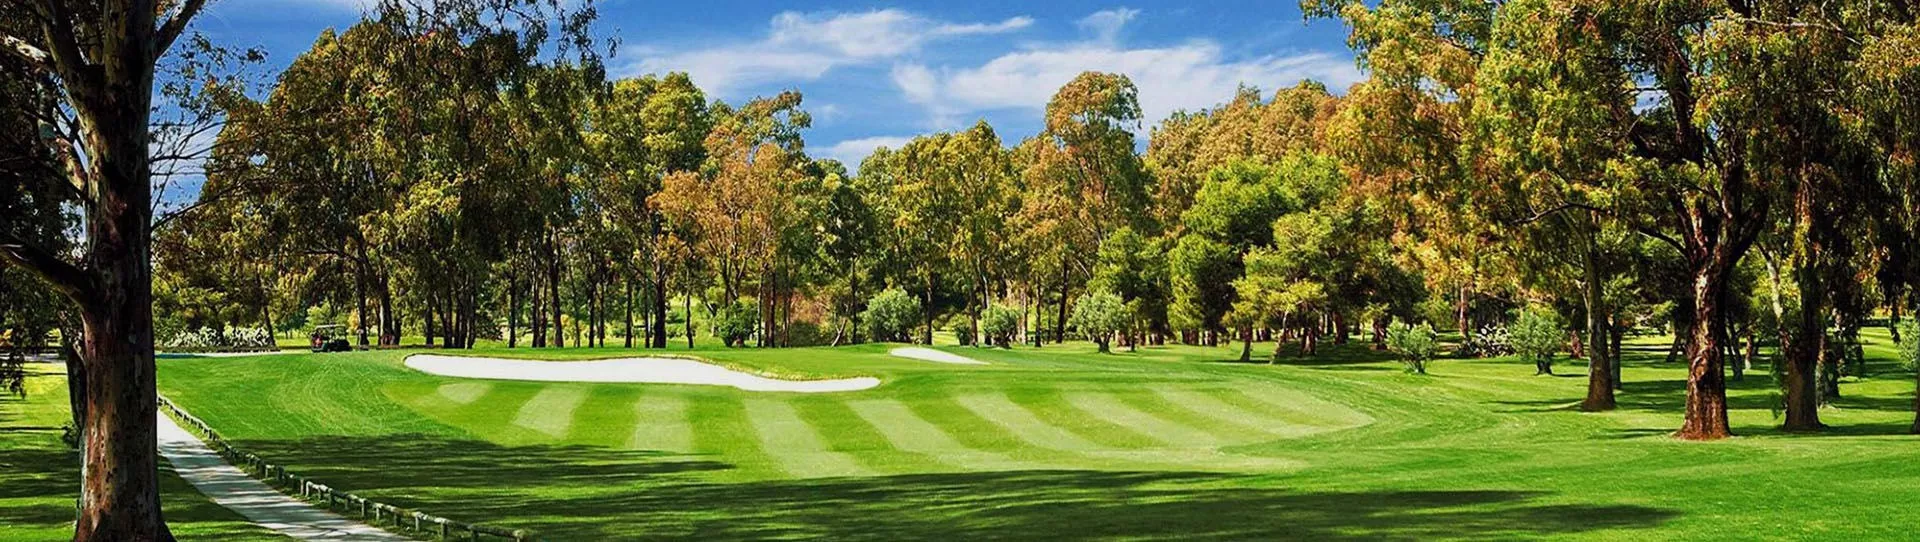 Spain golf courses - Atalaya Golf New Course - Photo 1